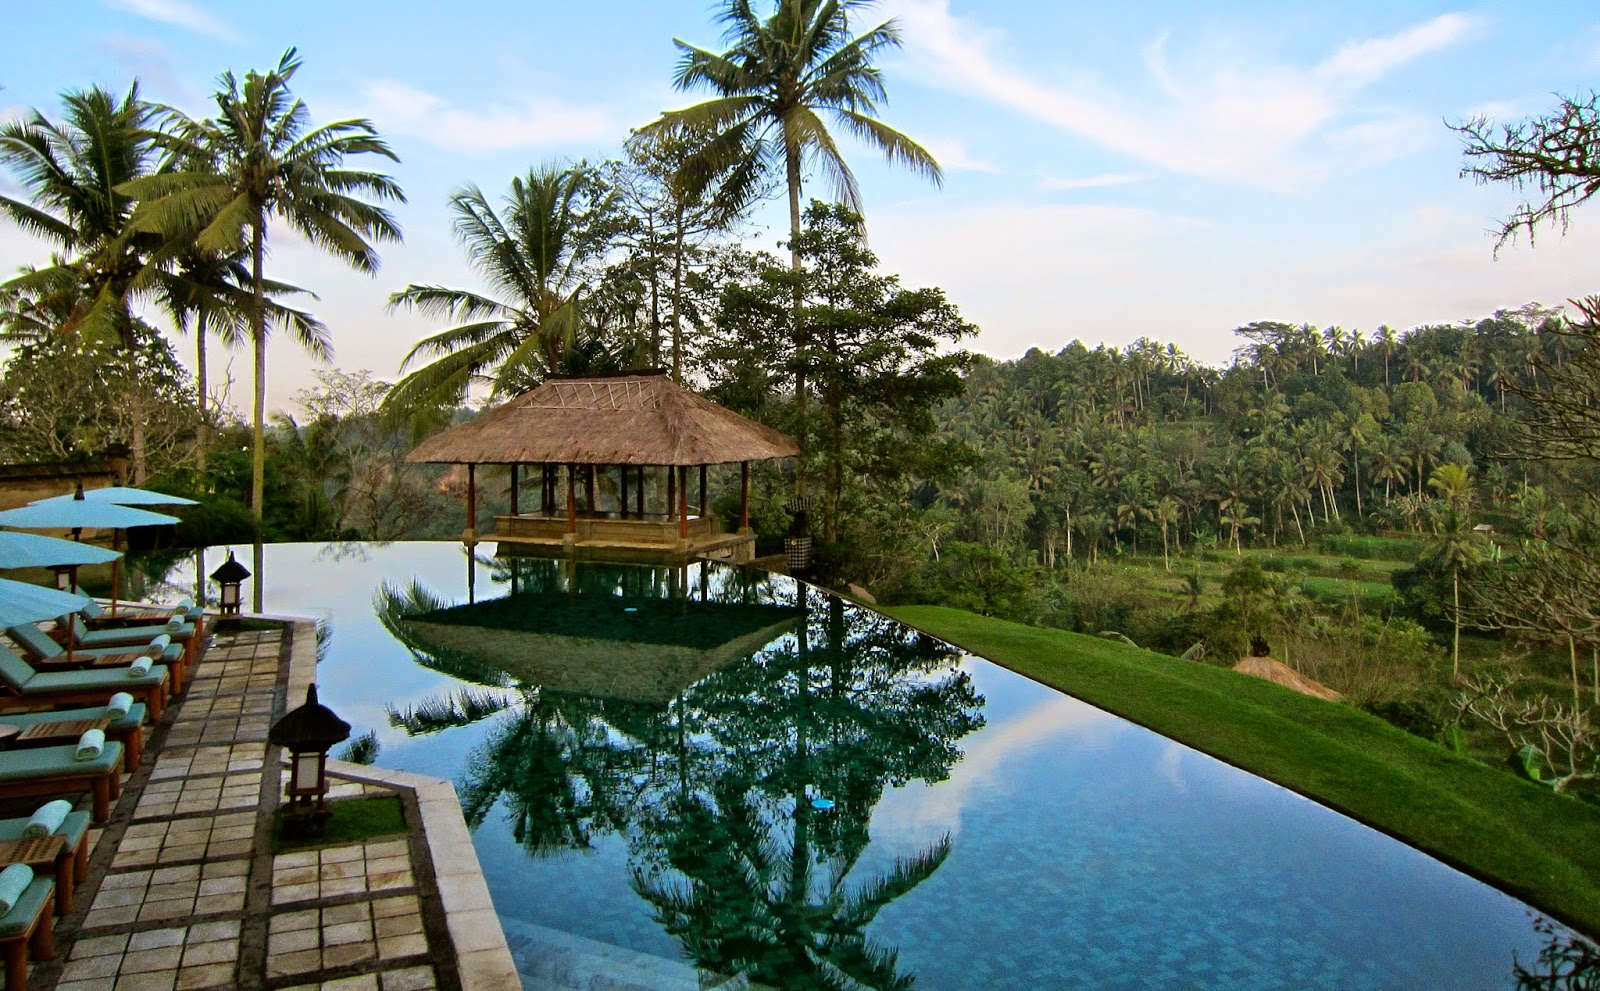  Luxury  Hotels  Amandari Resort  Bali  Revealed